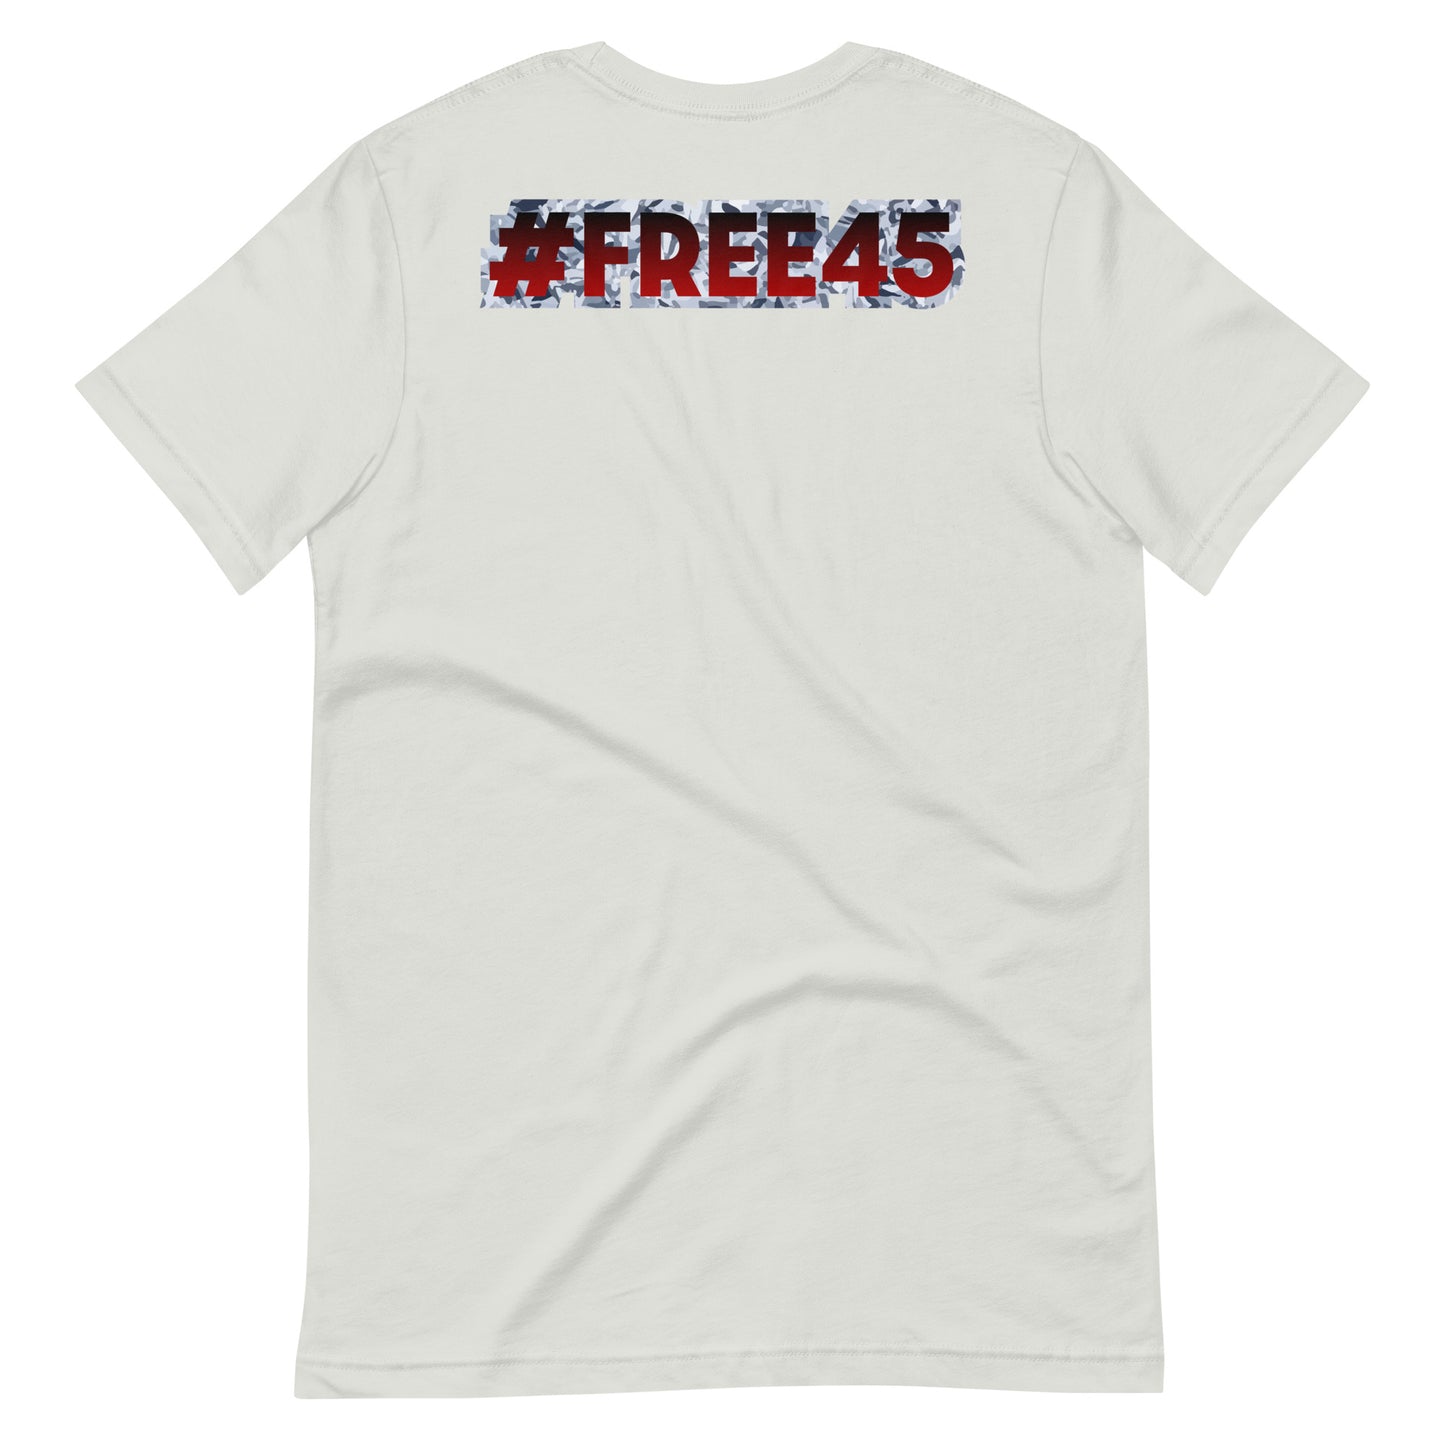 FREE45 graphic t-shirt